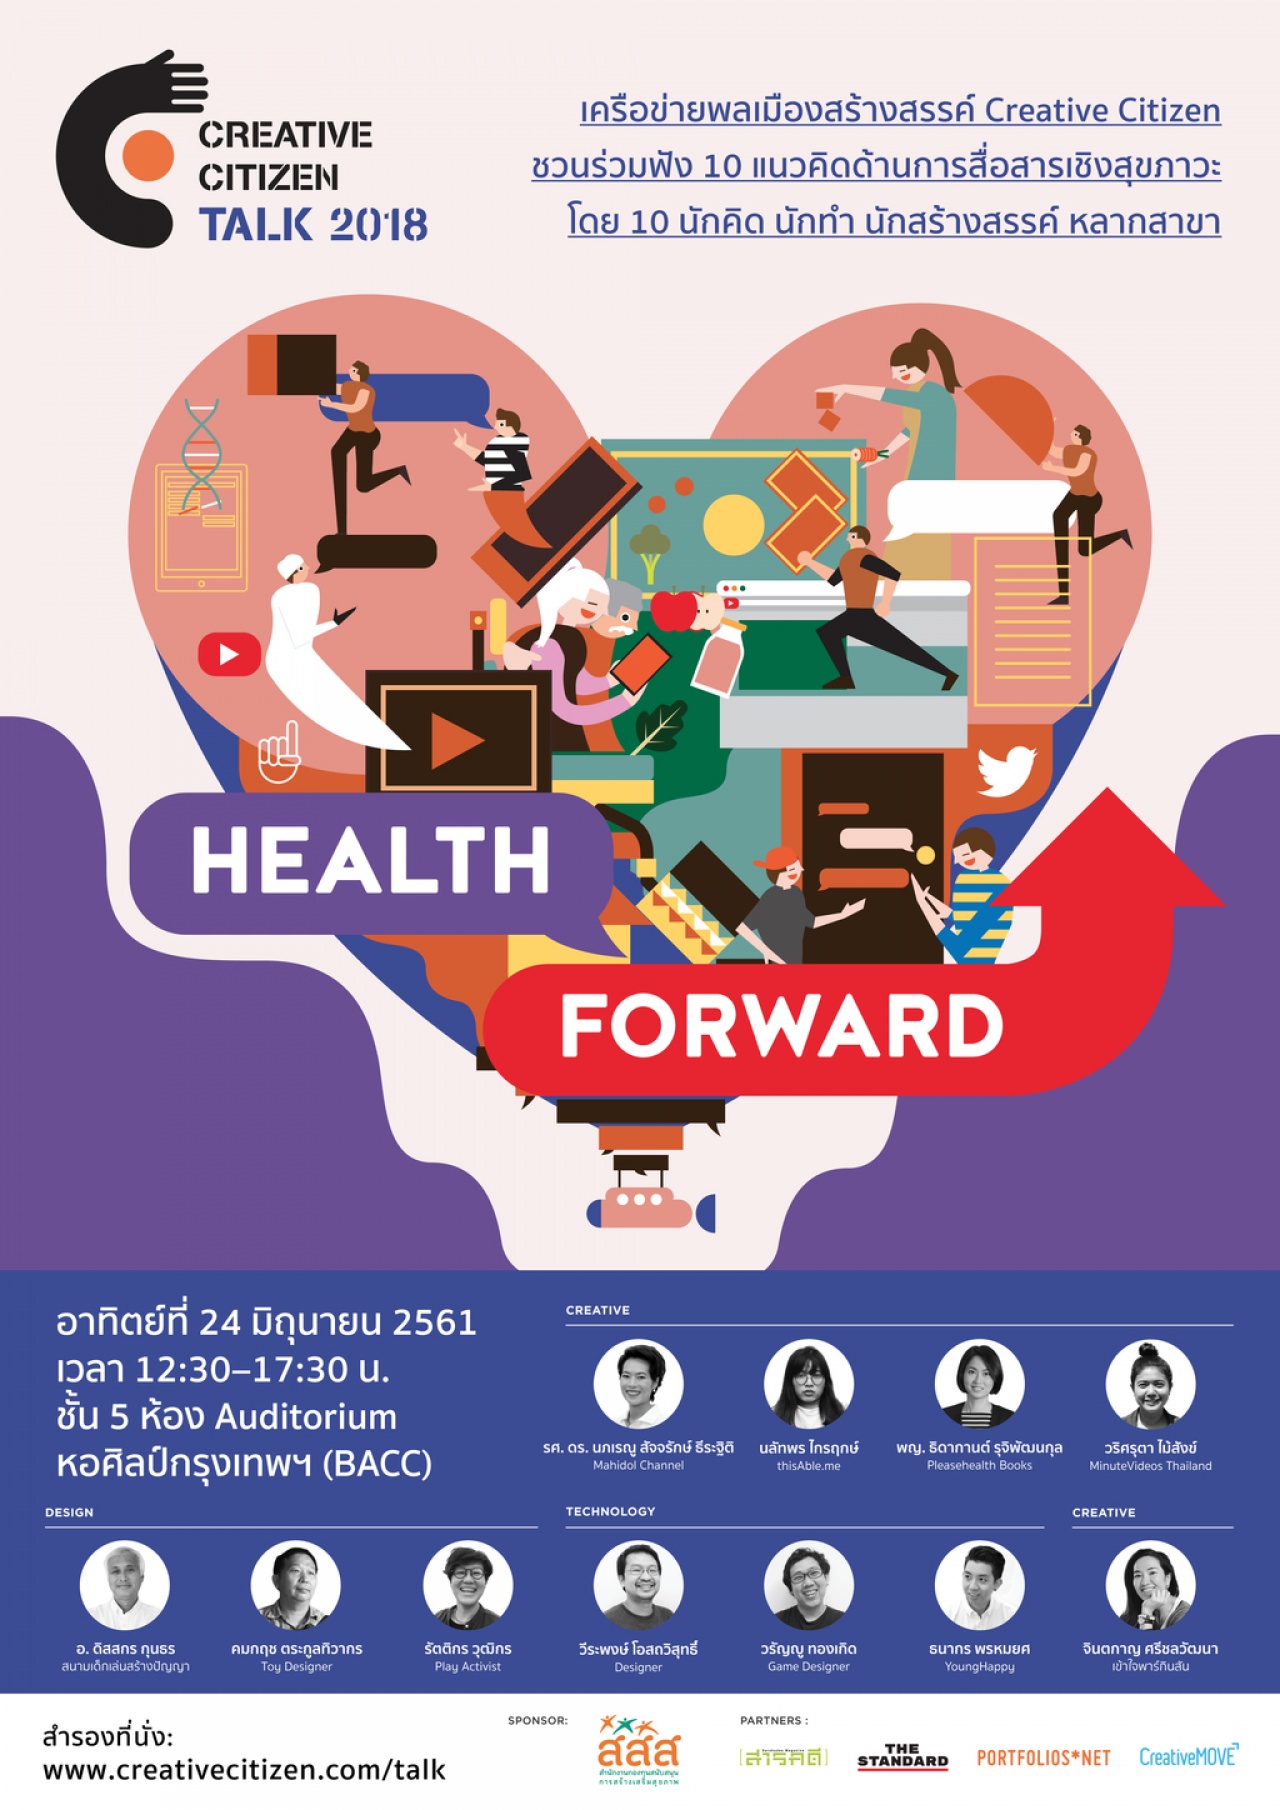 Creative Citizen Talk 2018: Health Forward